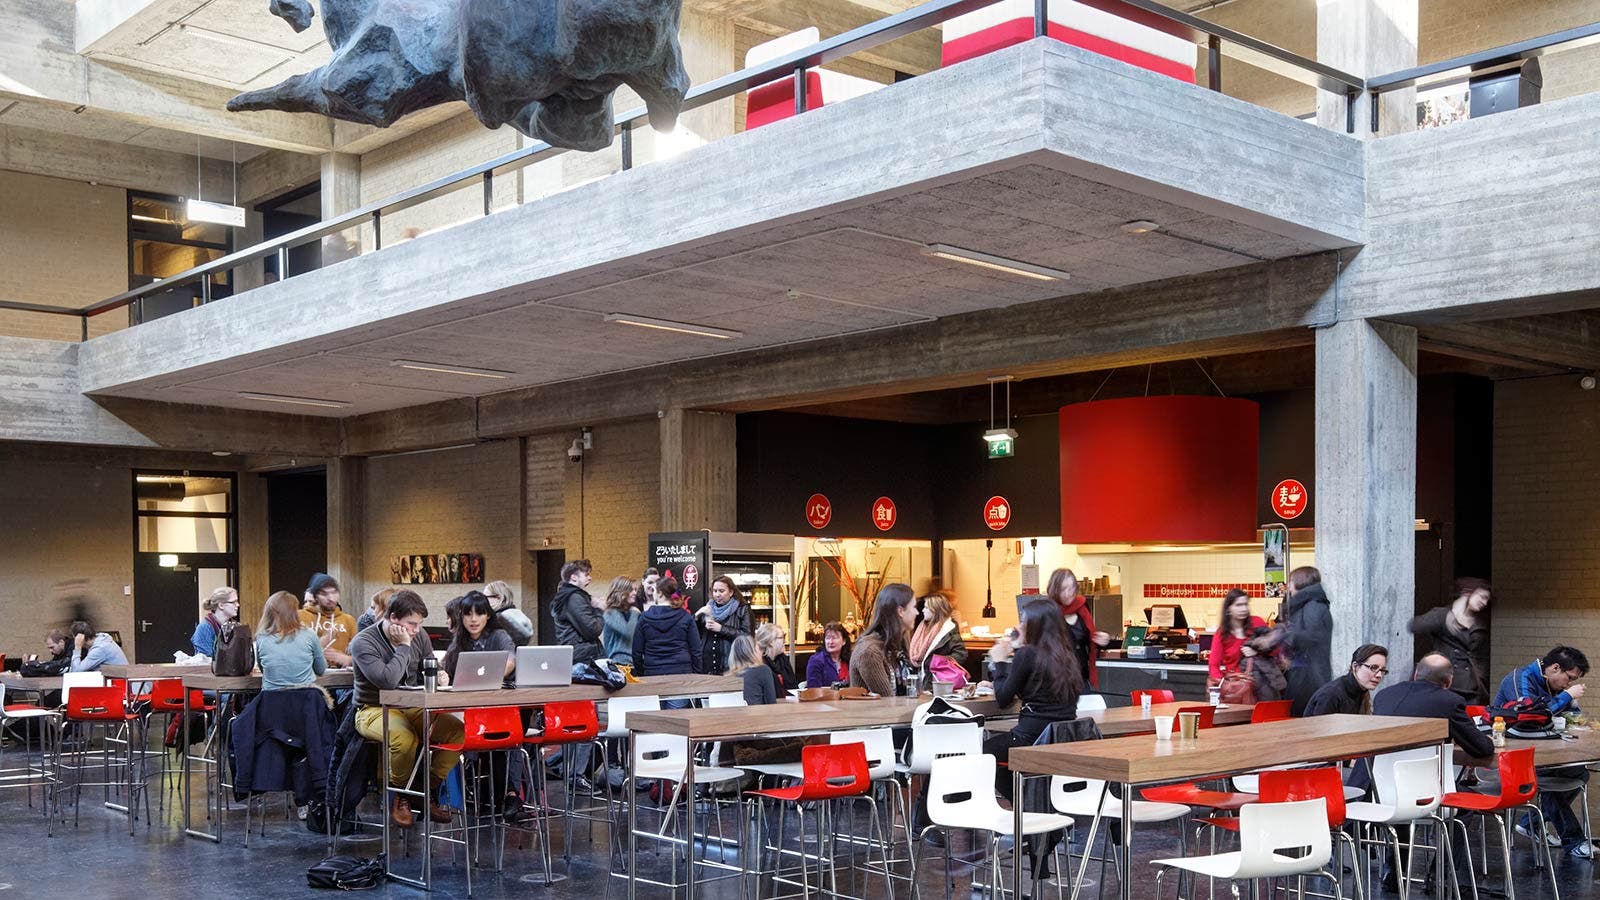 Cafes and restaurants at Tilburg University